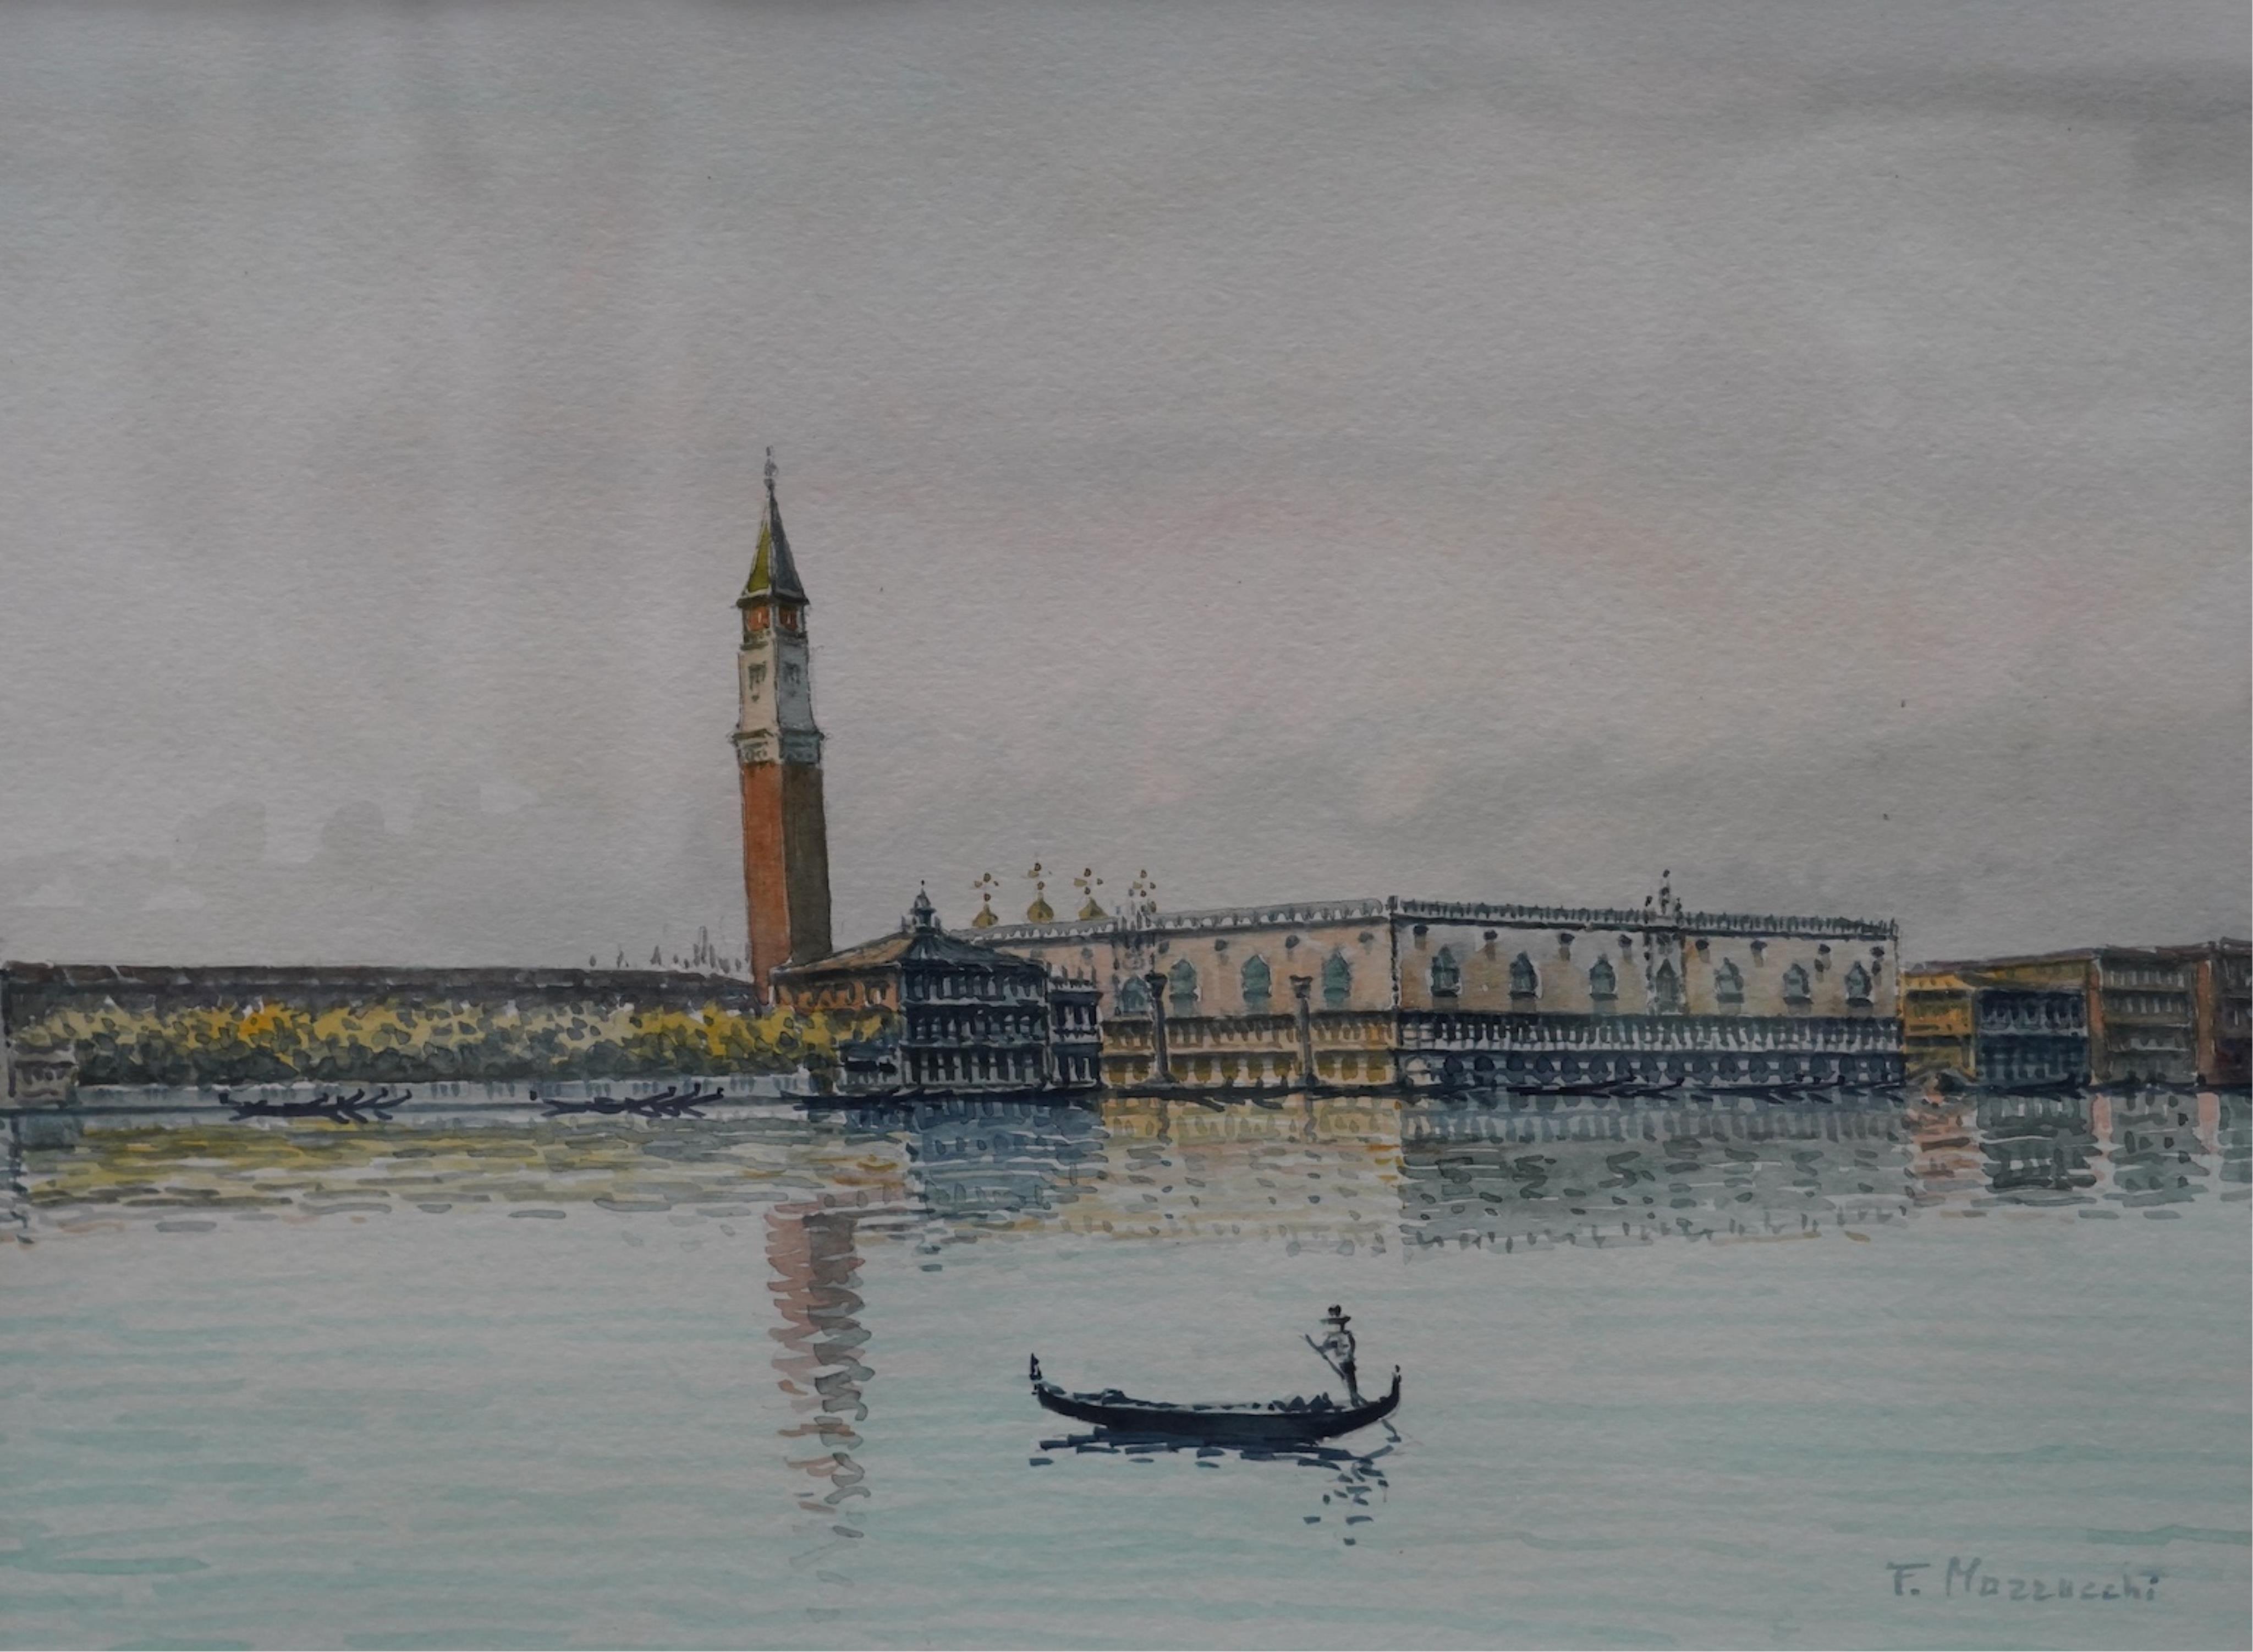 Francesco Mazzucchi (Italian, 1896-1967), four watercolours, Venetian canal scenes, signed, 29 x 39cm